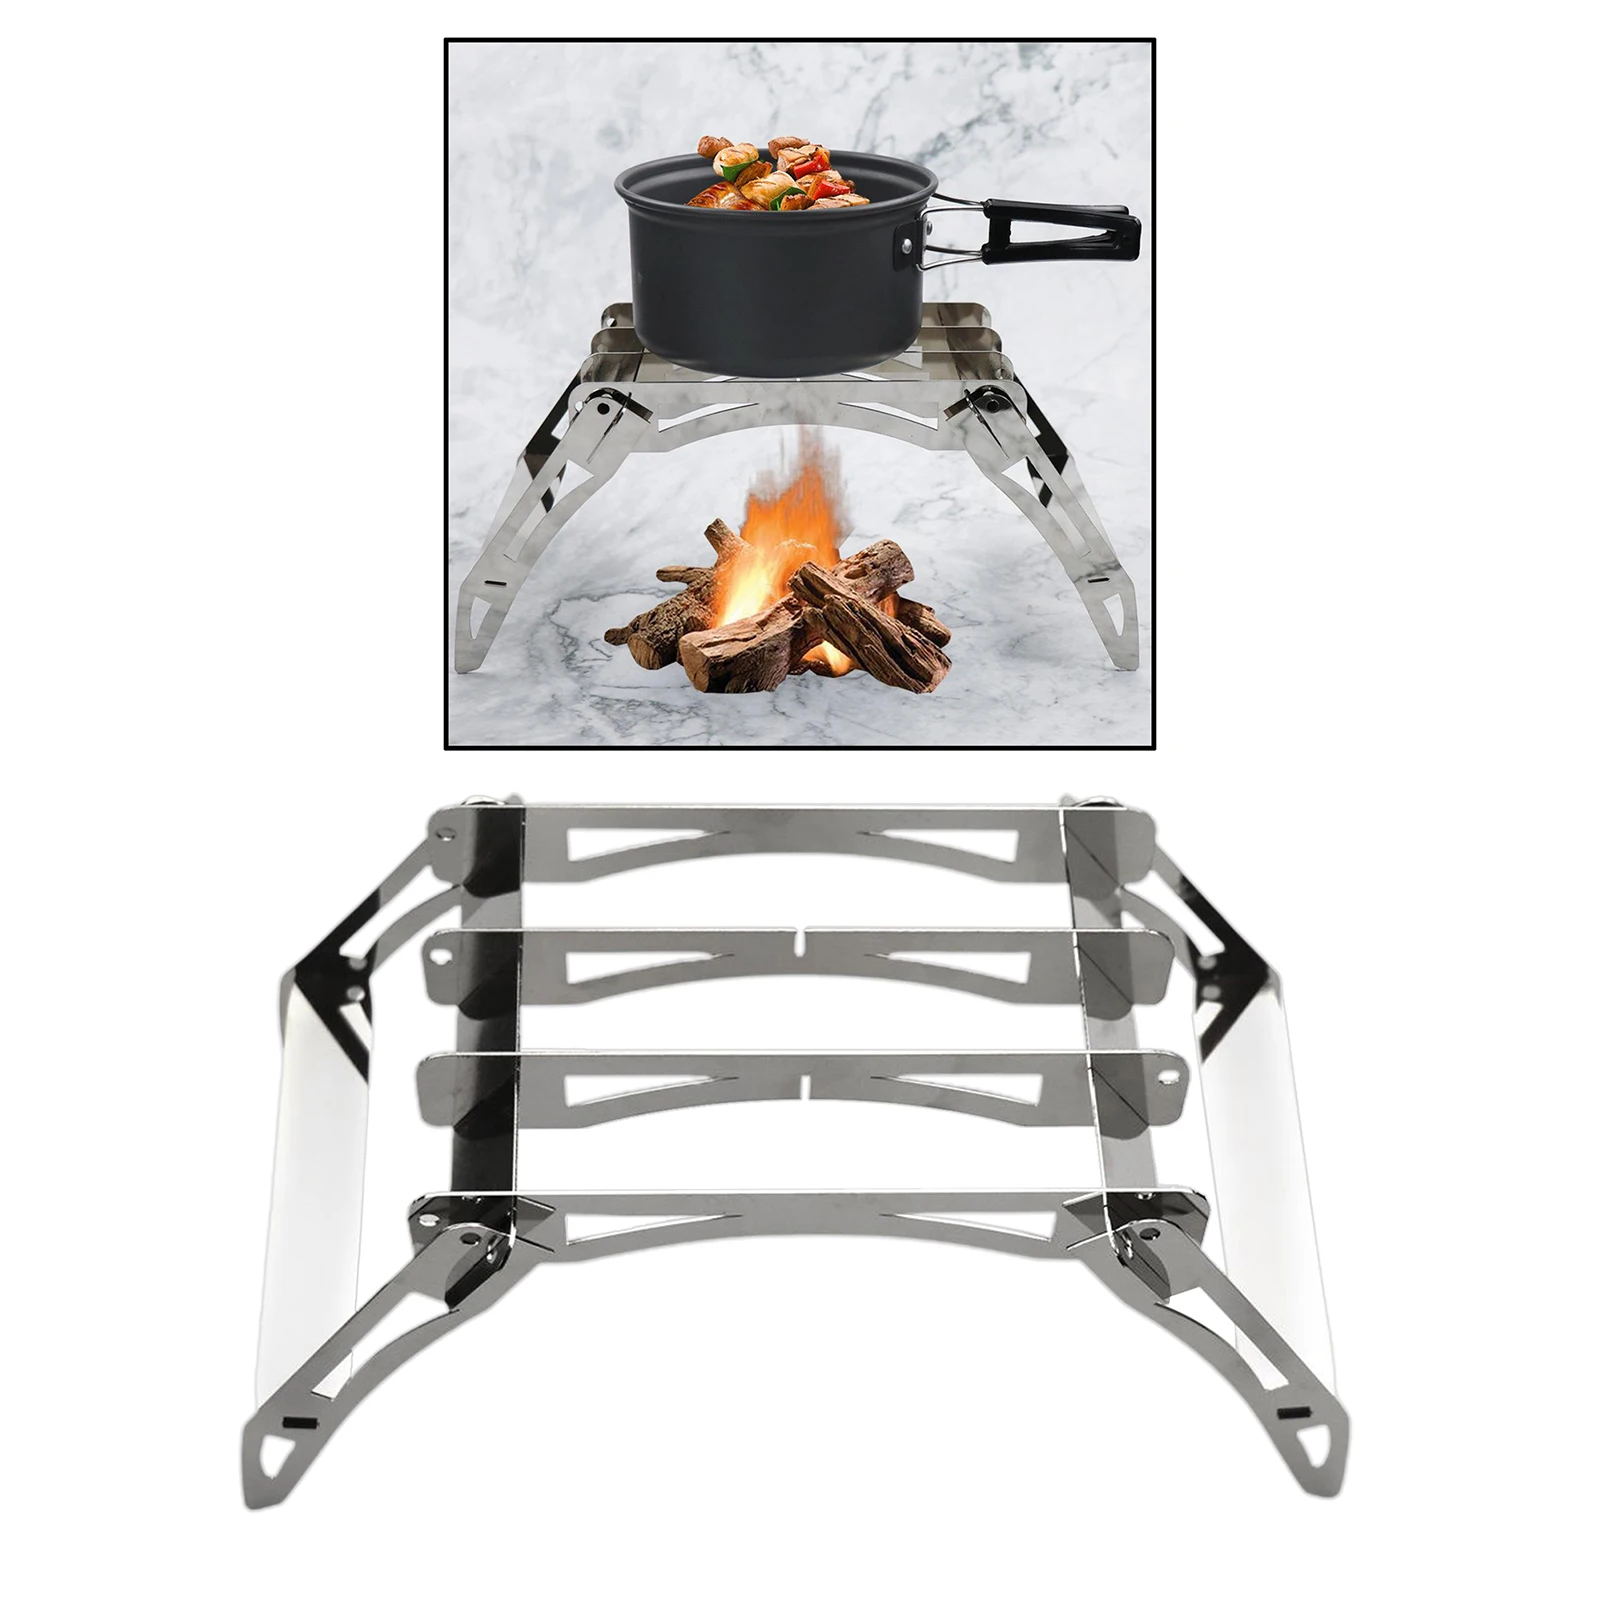 Folding Alcohol Wood Stove Stand Rack Bracket Pot Holder Camping Cook BBQ